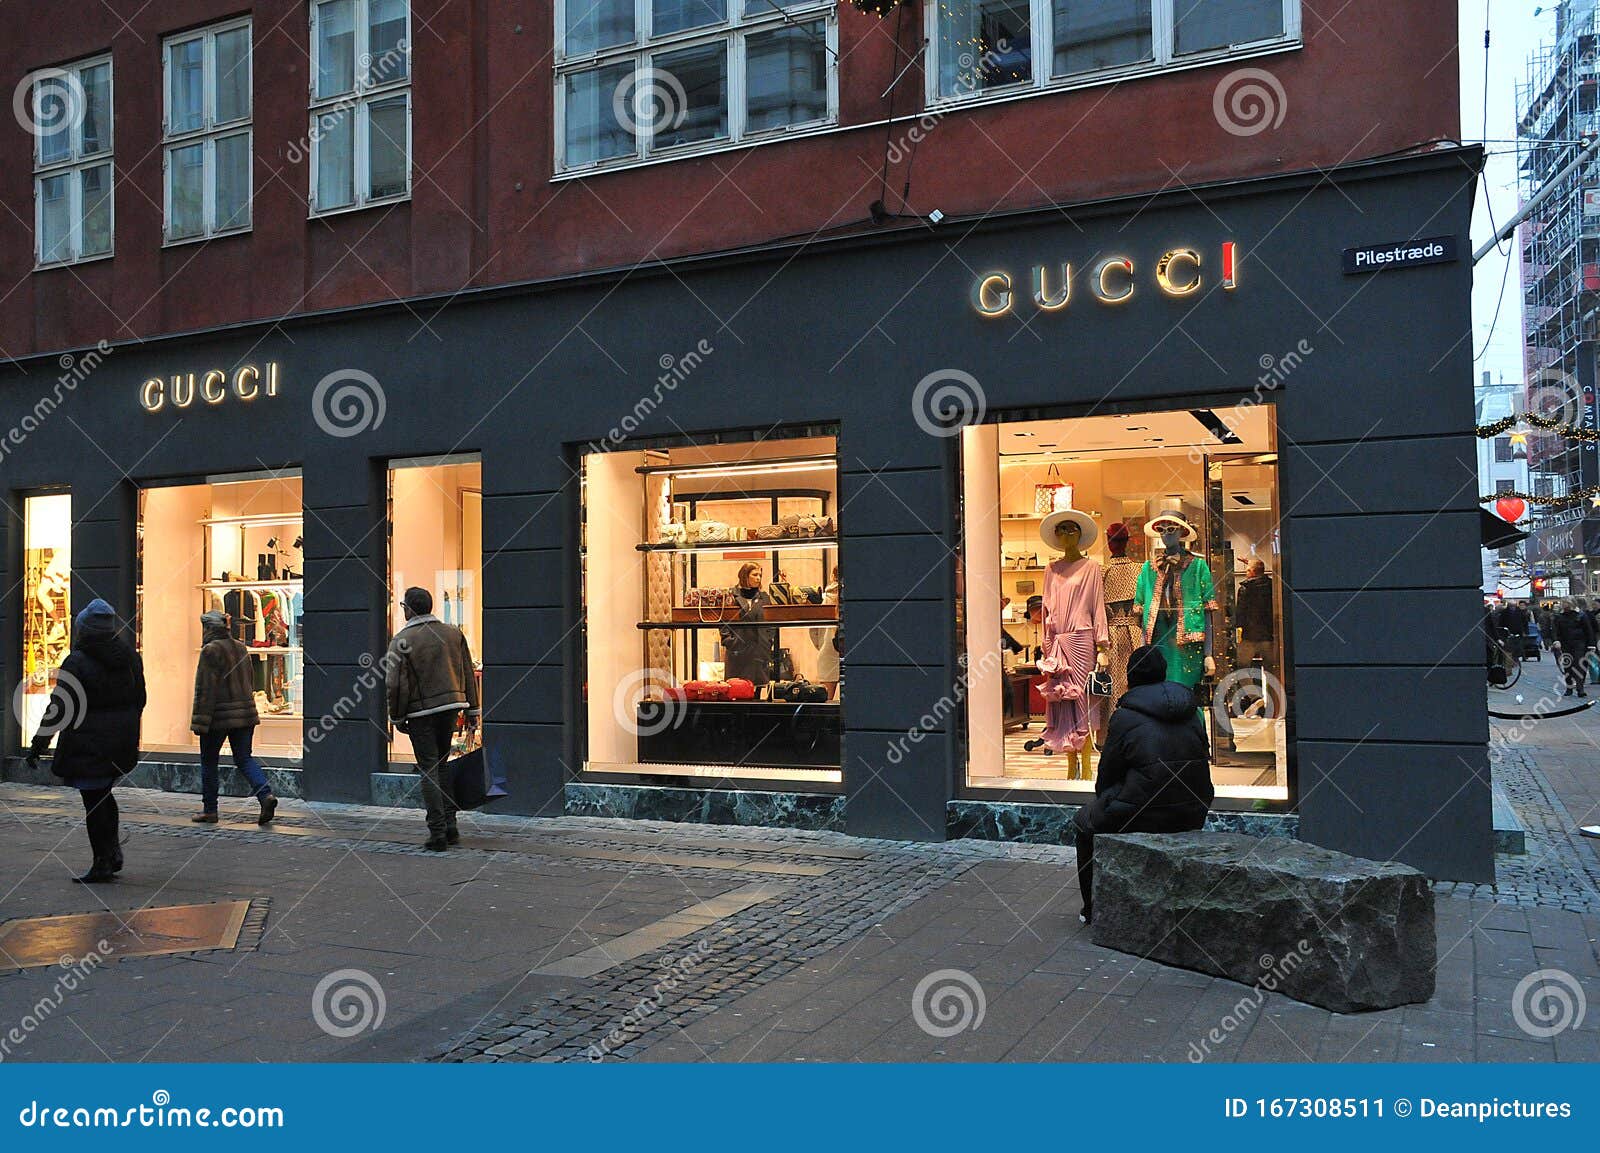 PEOPLE WALK by GUCCI STORE COPENHAGEN DENMARK Editorial Photo - Image of europa, gucci: 167308511